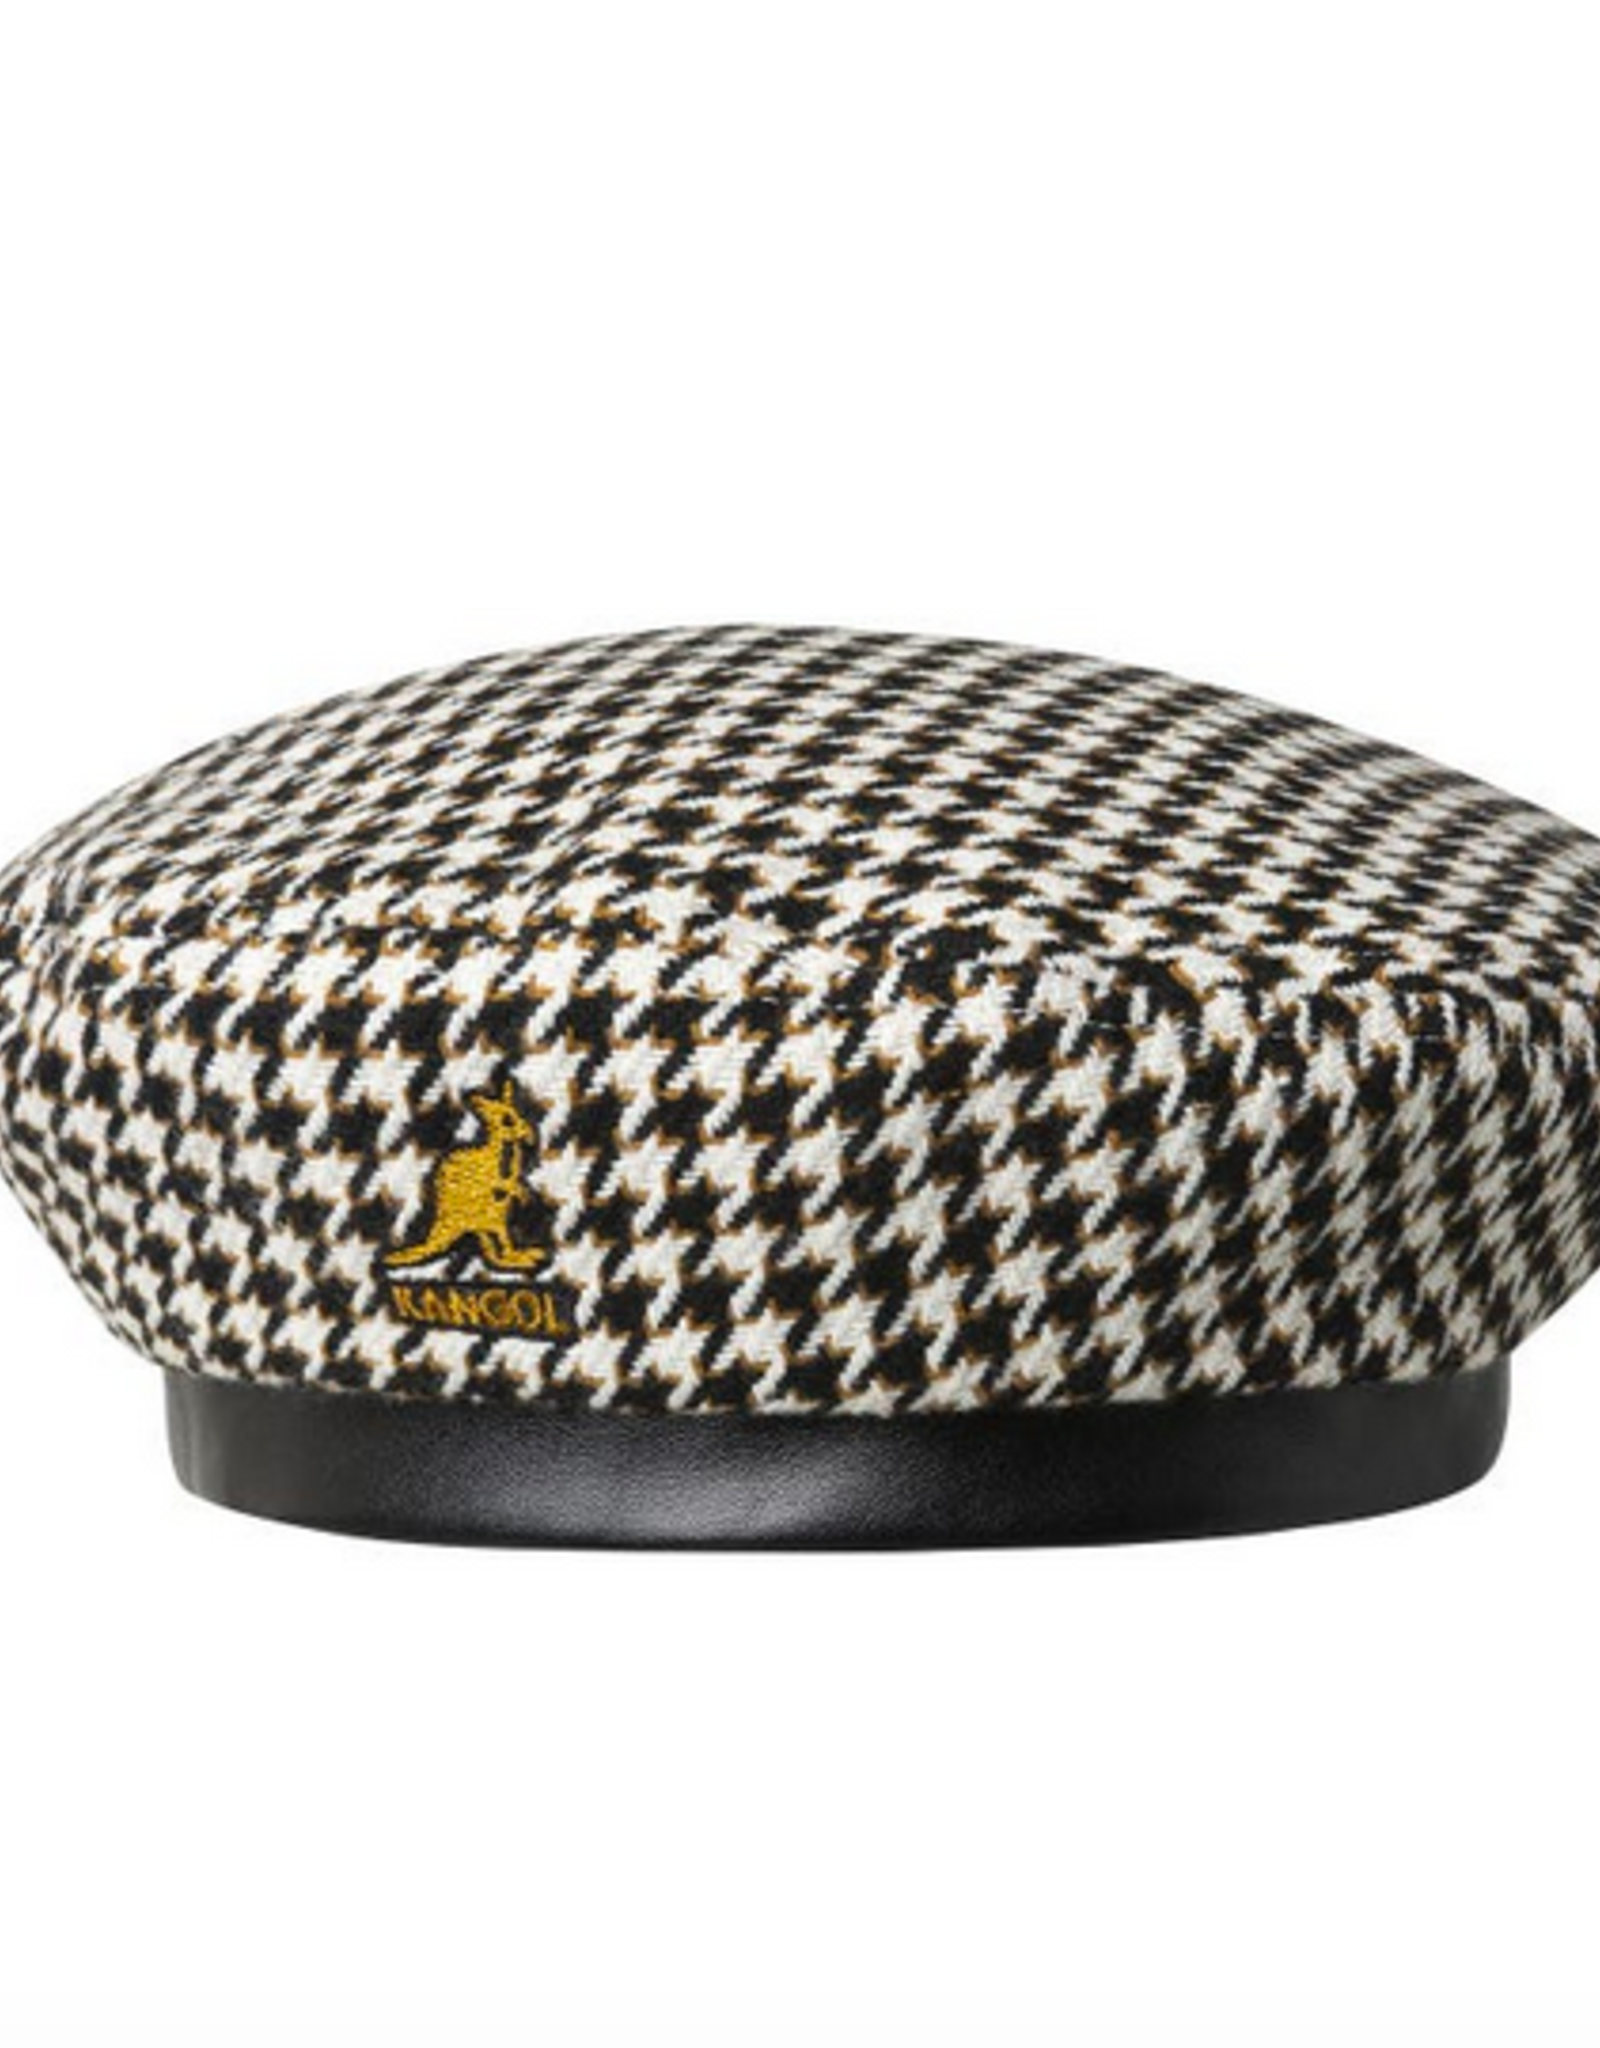 kangol Tooth grid beret hat black/white S/M